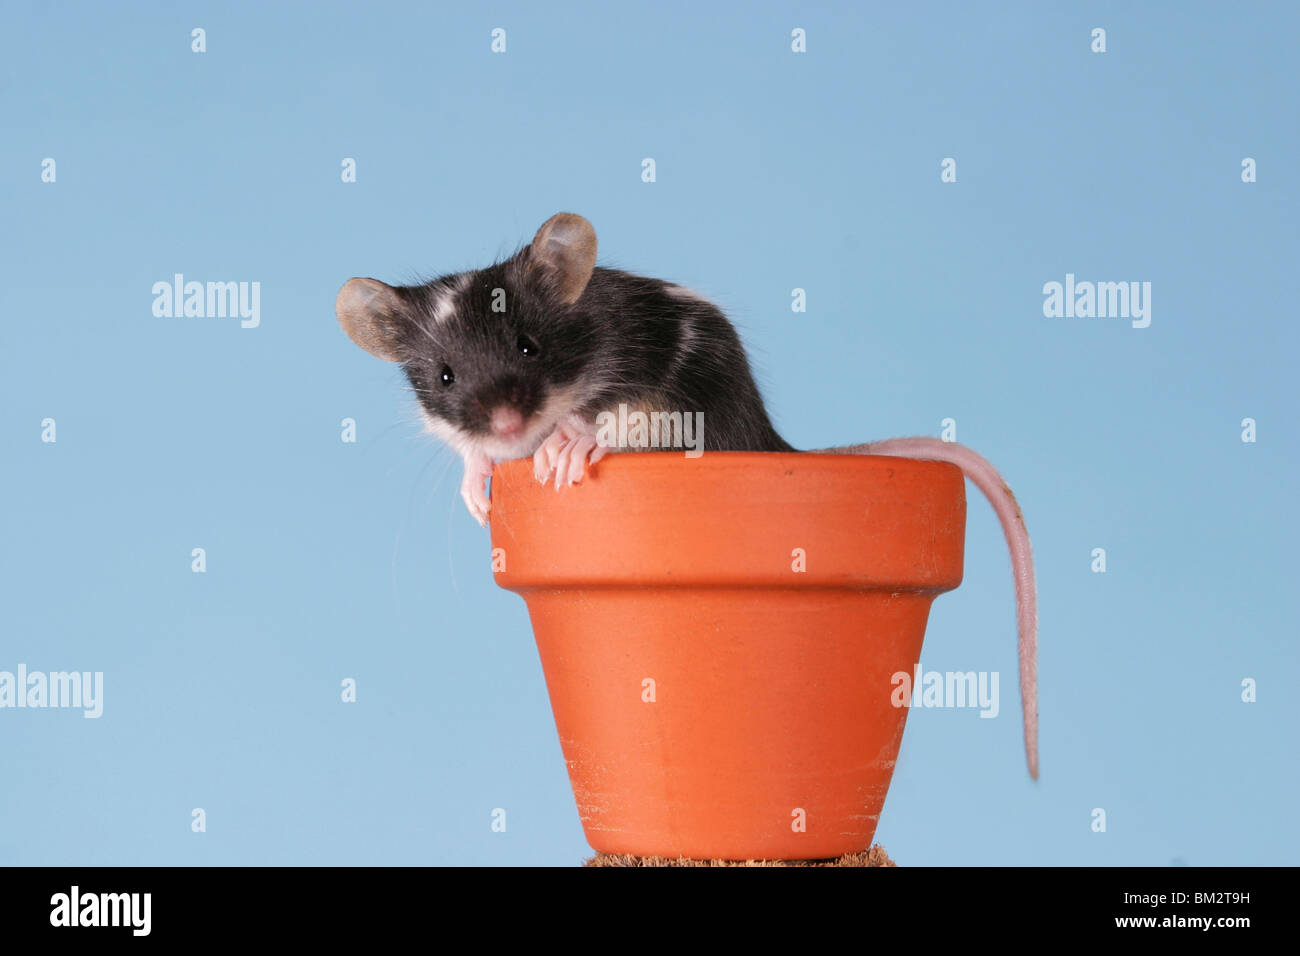 Maus / mouse Stock Photo